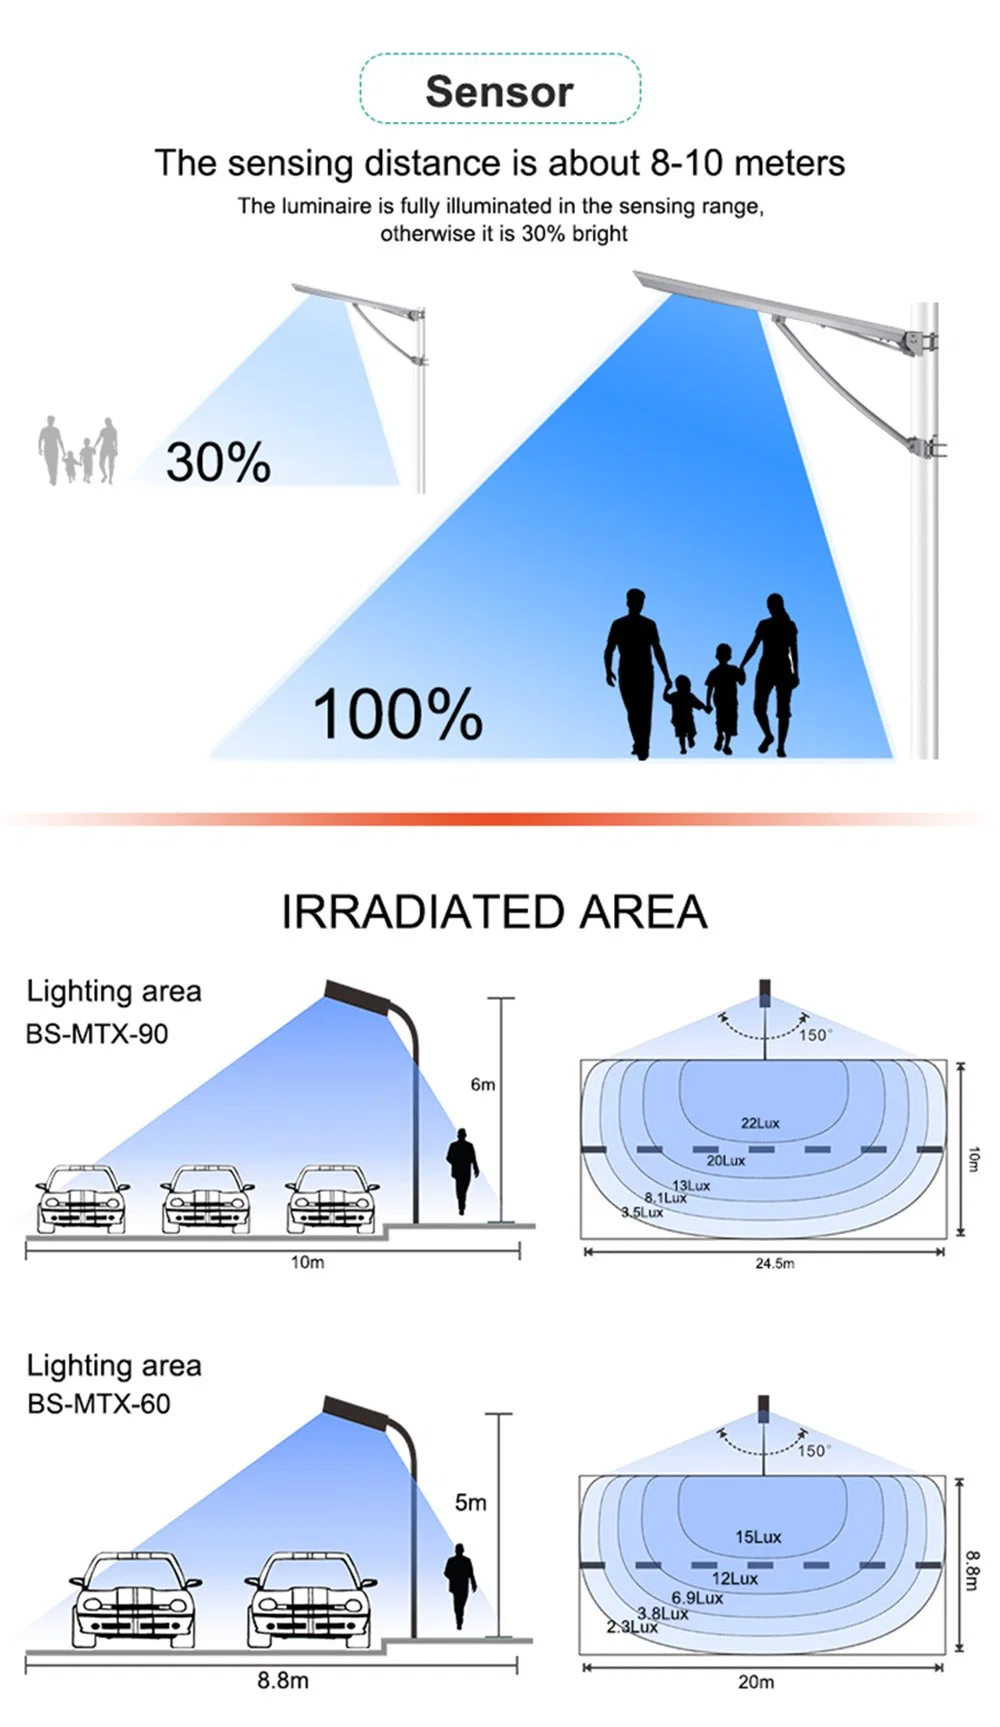 High Quality High Power 120W Integrated Solar Panel Light LED Lighting for Road Garden